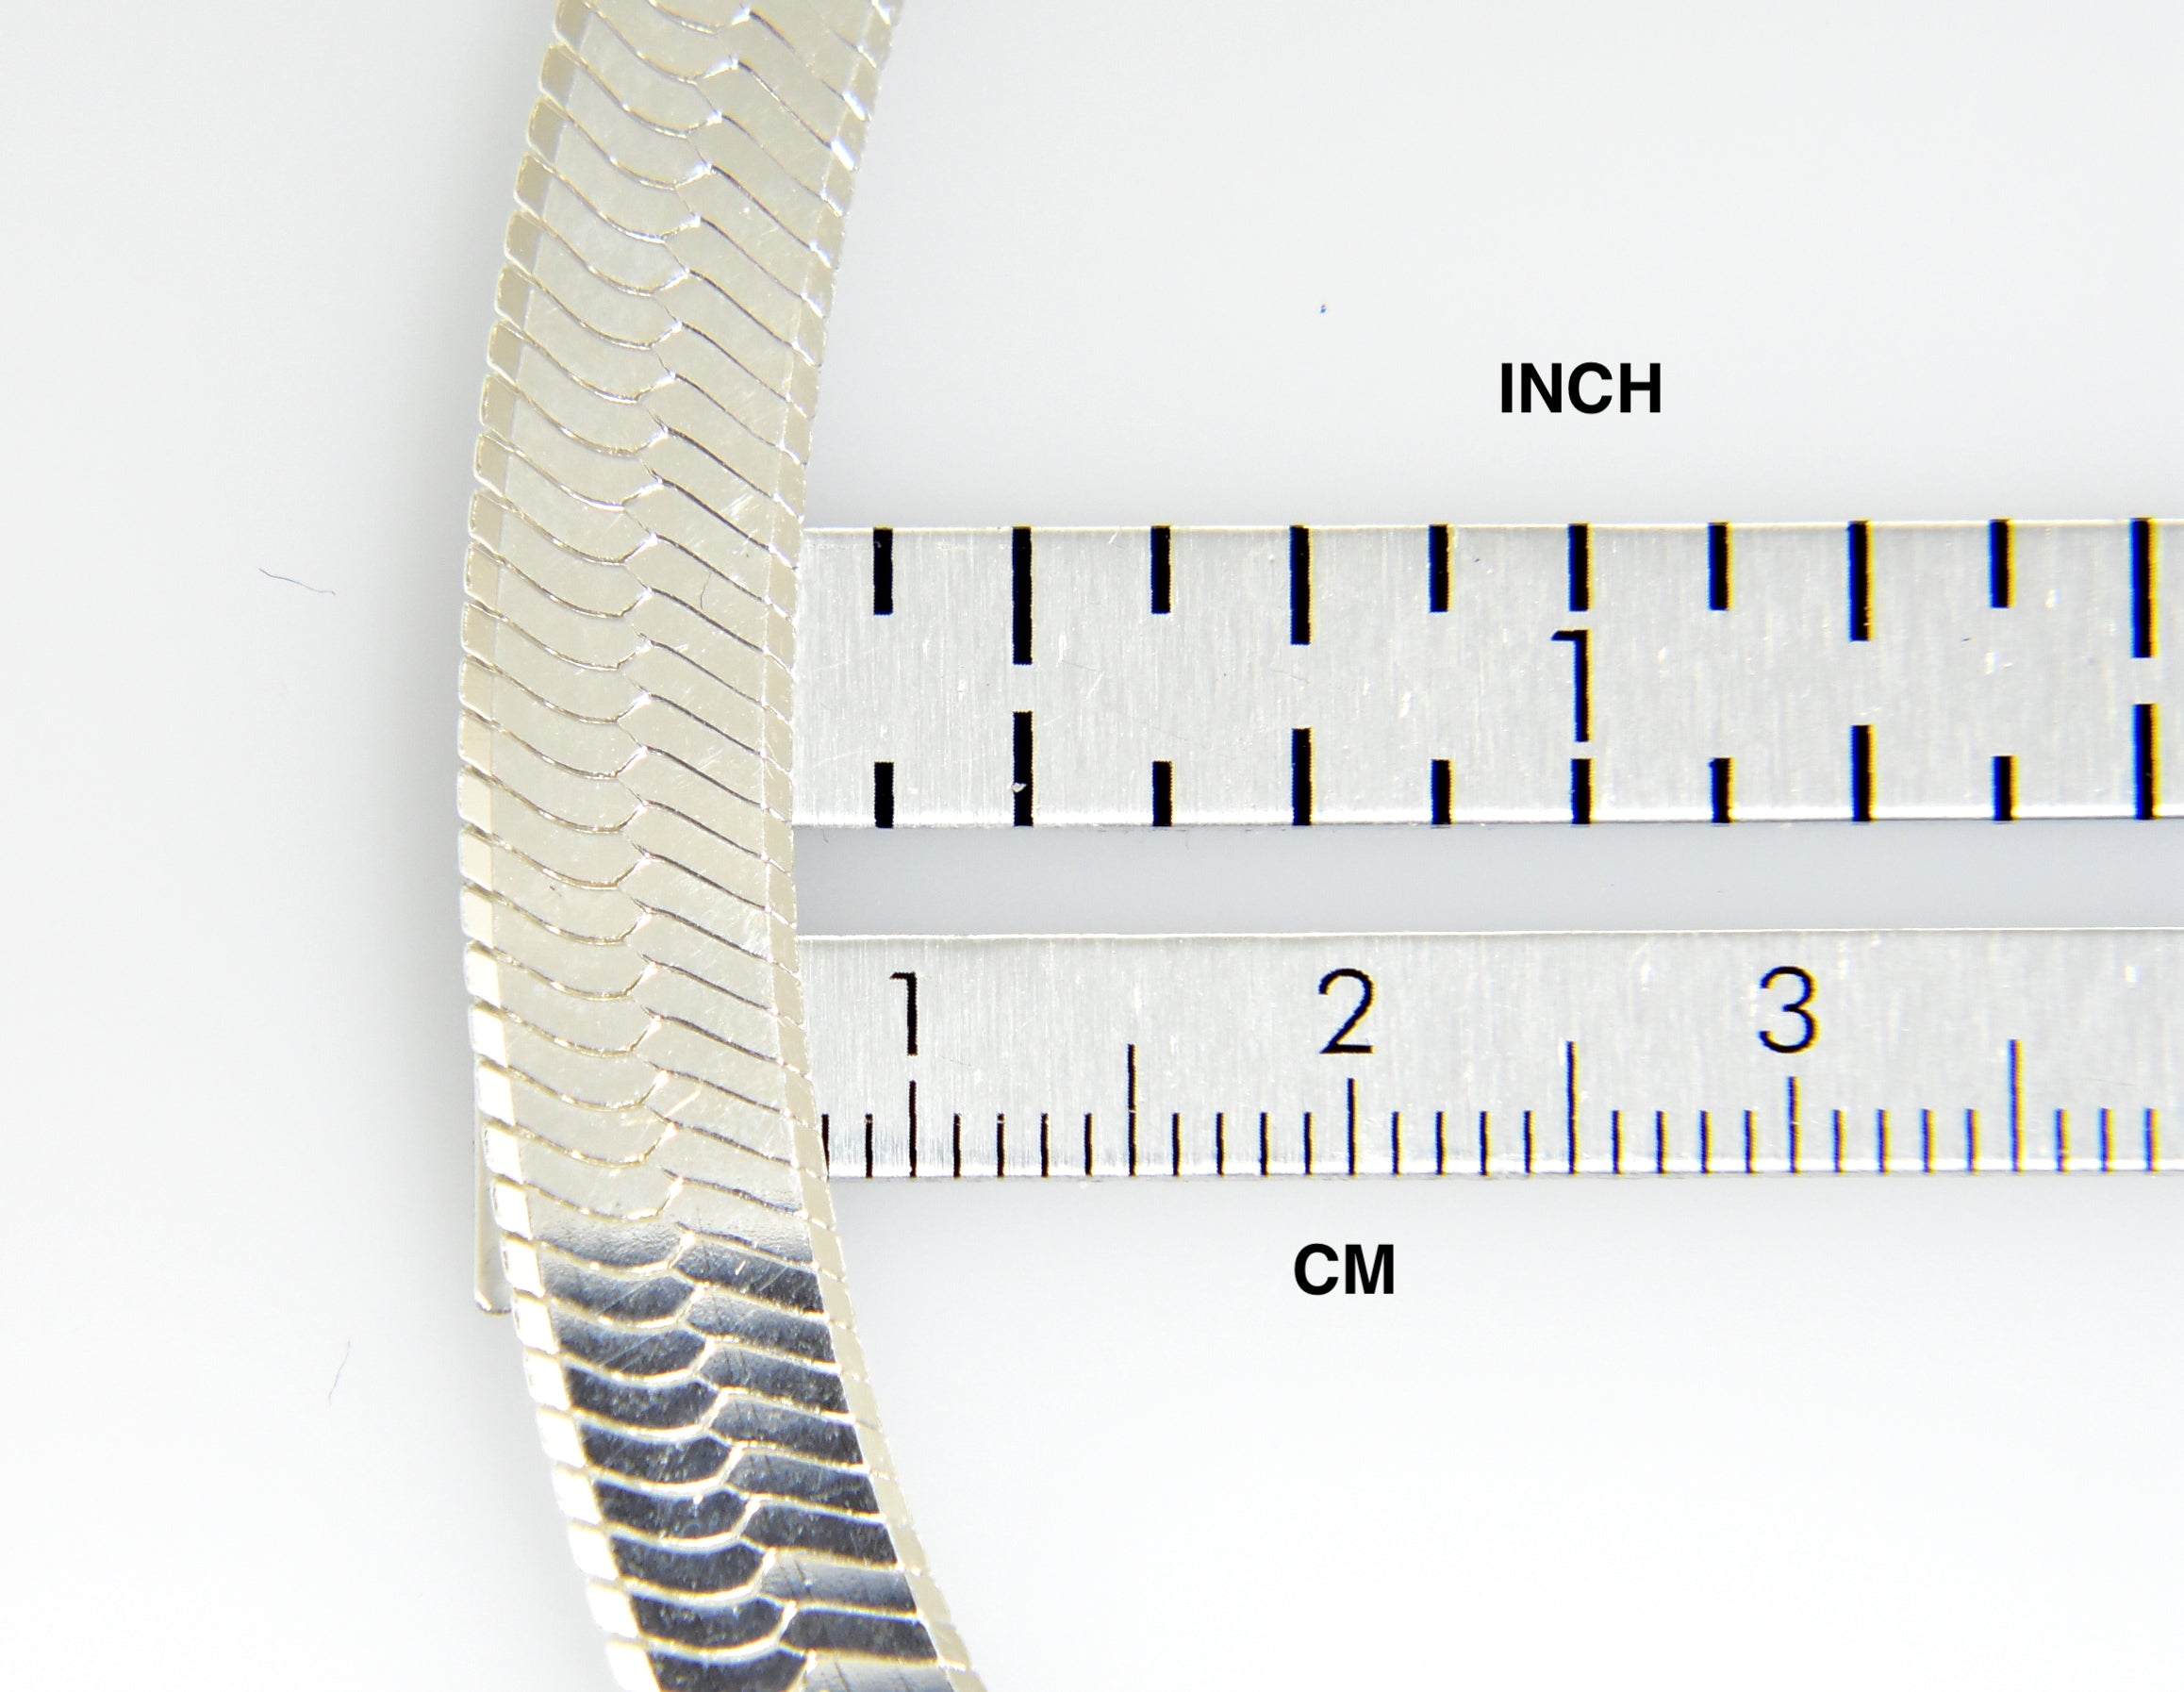 Sterling Silver 8mm Herringbone Bracelet Anklet Choker Necklace Pendant Chain